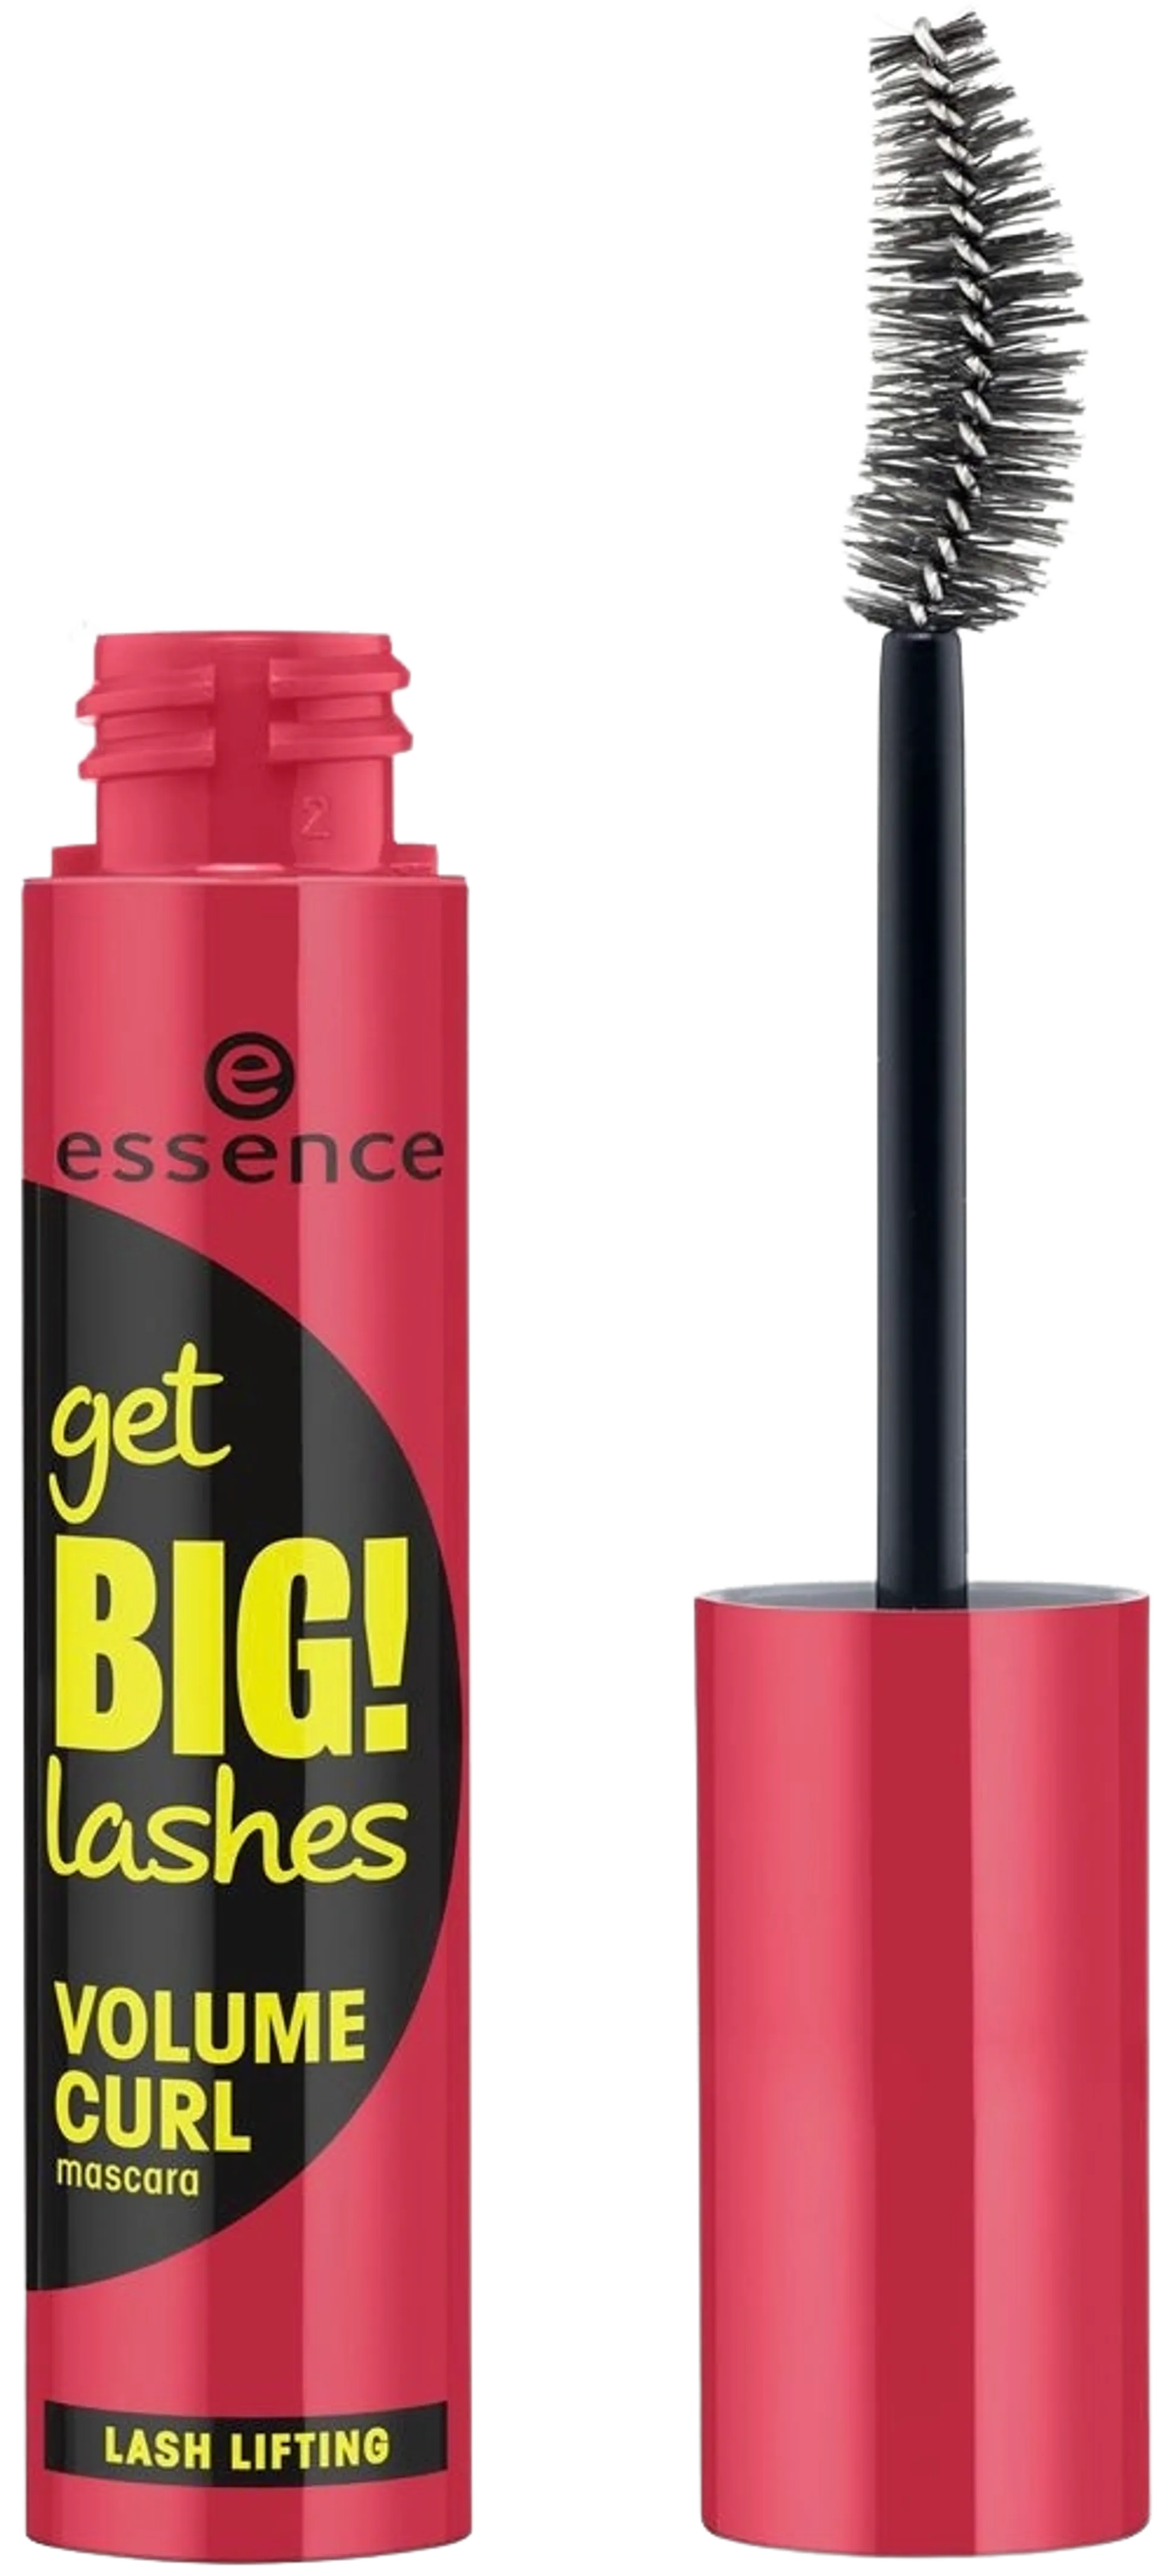 essence get BIG! lashes VOLUME CURL mascara 12 ml - 1